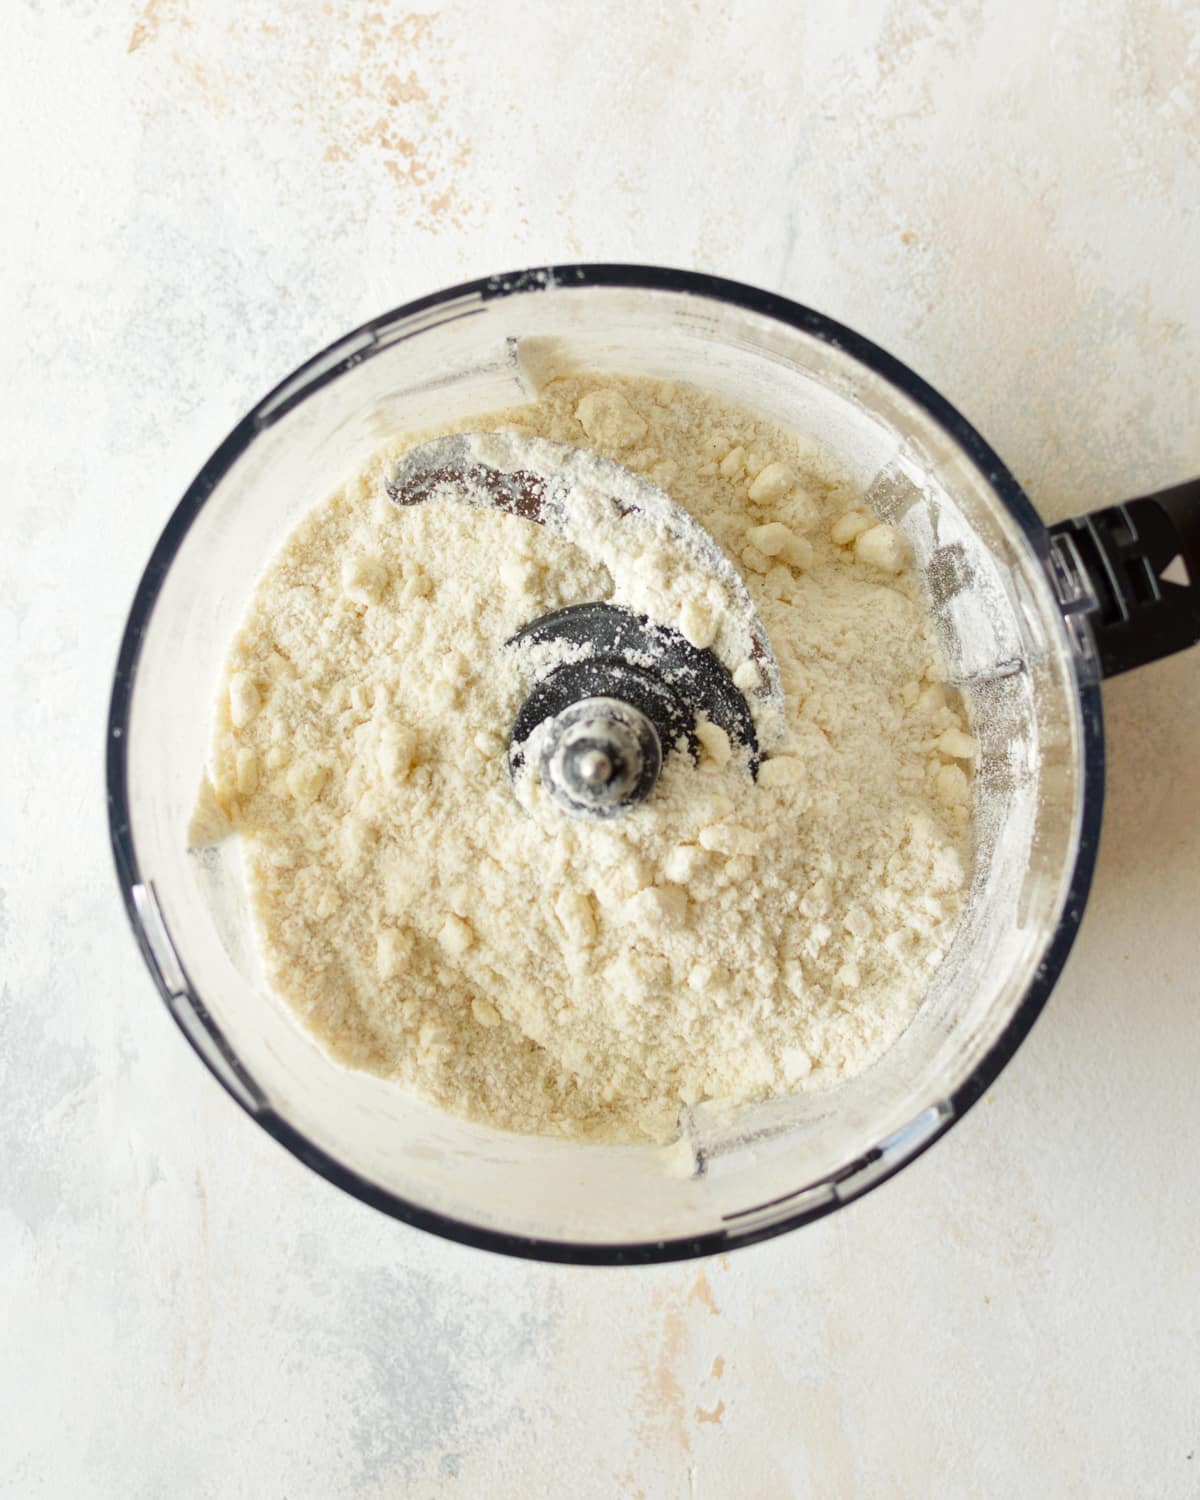 butter, flour, sugar, and salt in a food processor